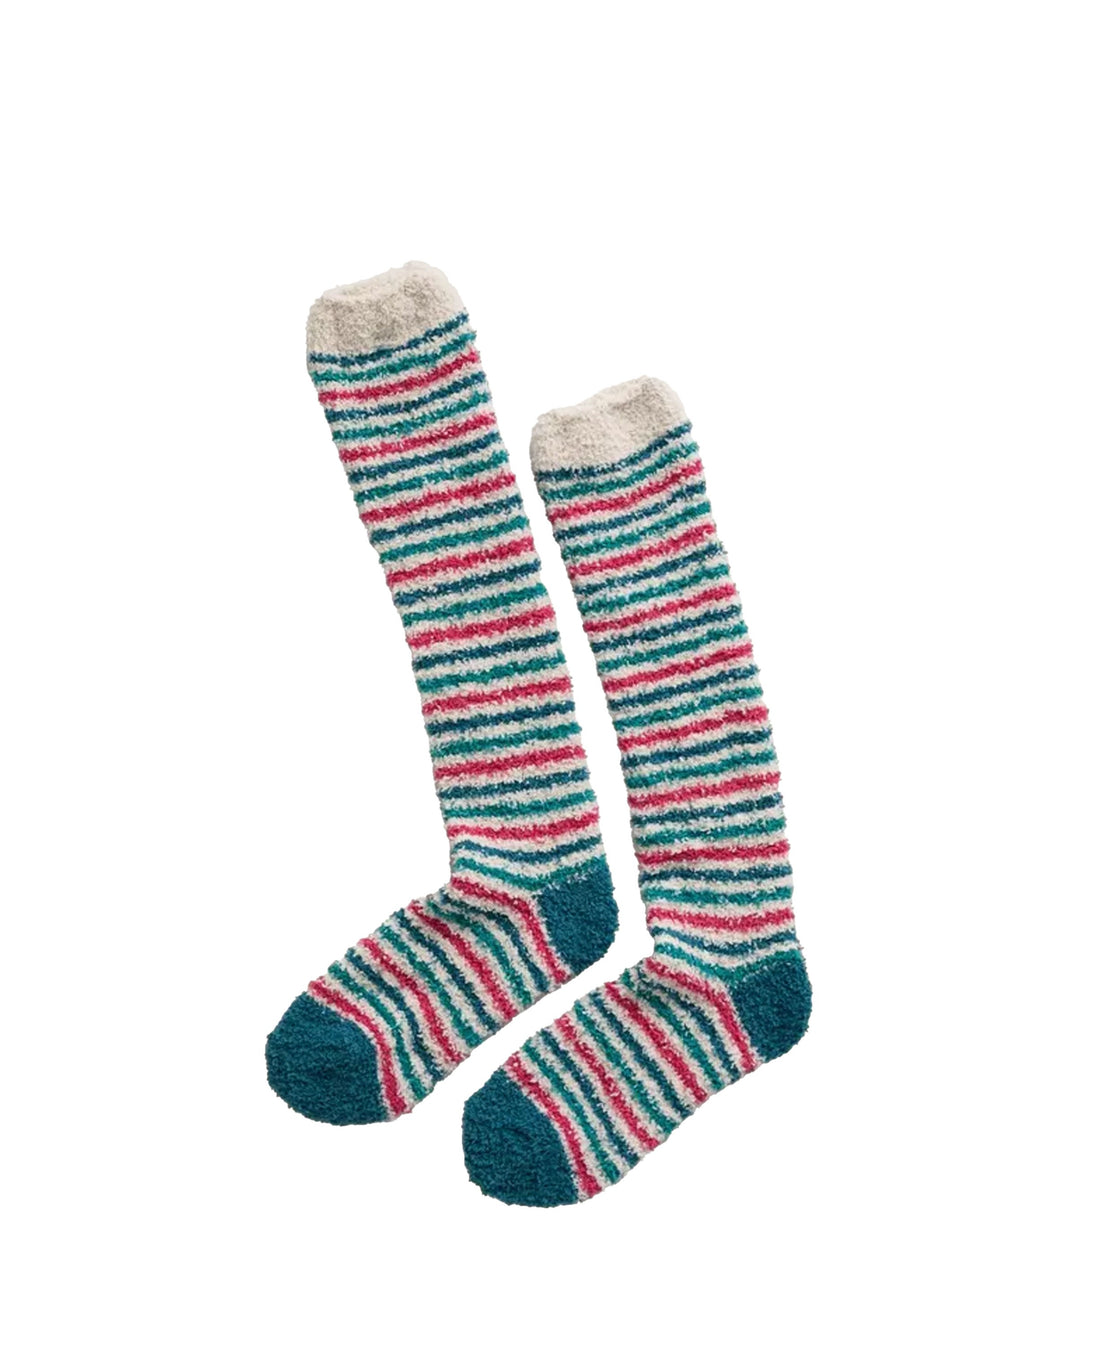 Fluffies Long Socks - Hew Seaway Mix